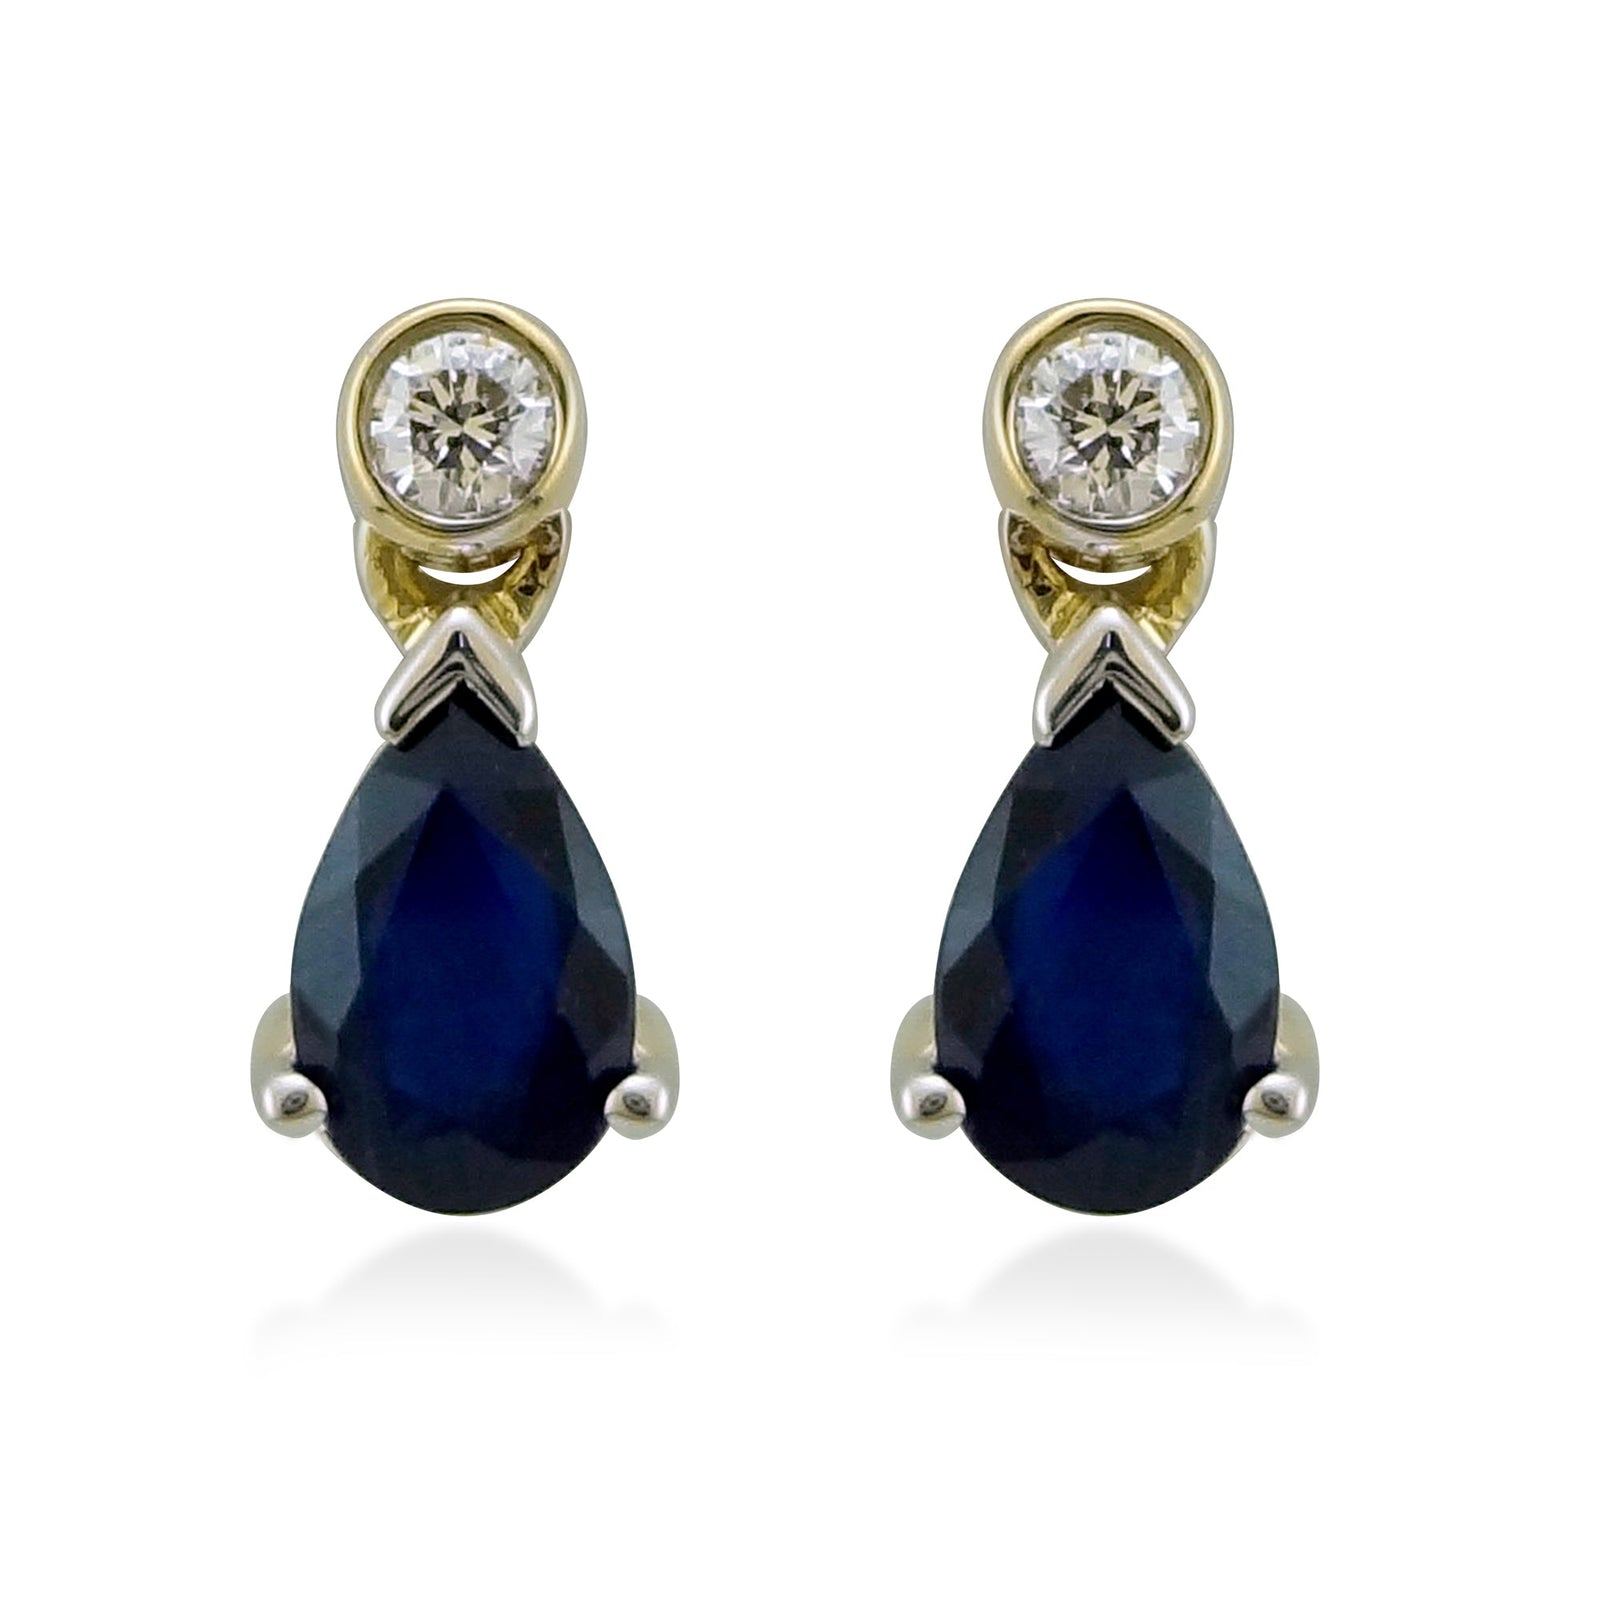 9ct gold 7x5mm pear shape sapphire & diamond earrings 0.05ct